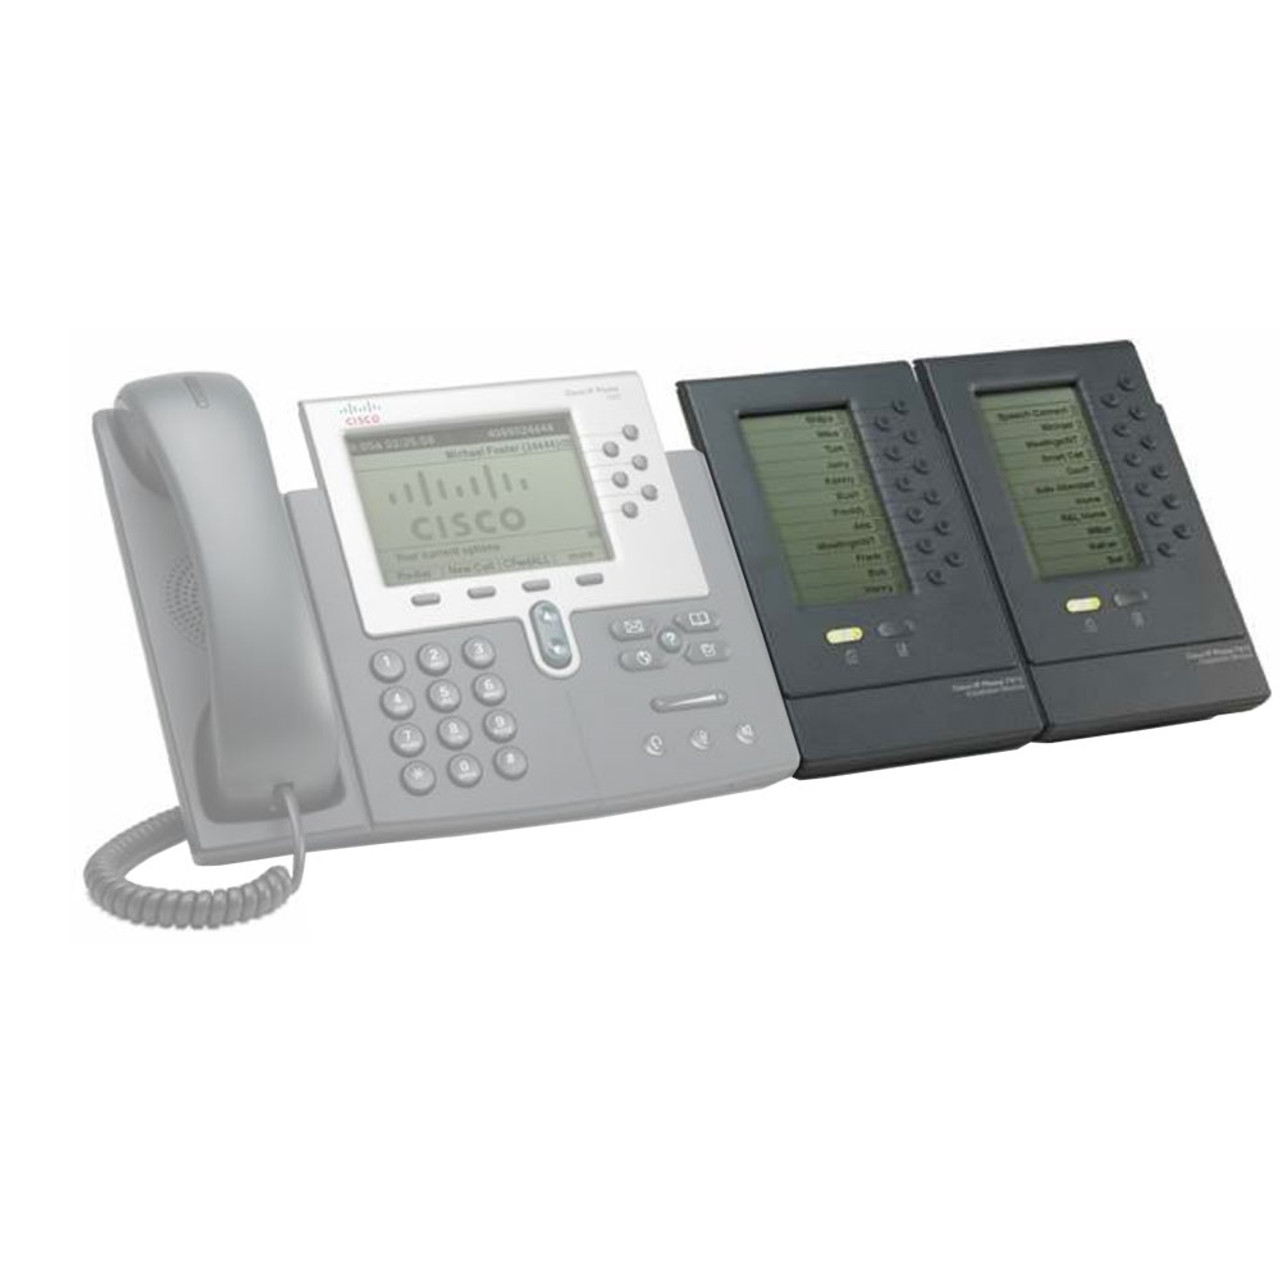 Cisco CP-7915 VoIP Phone Expansion Module 